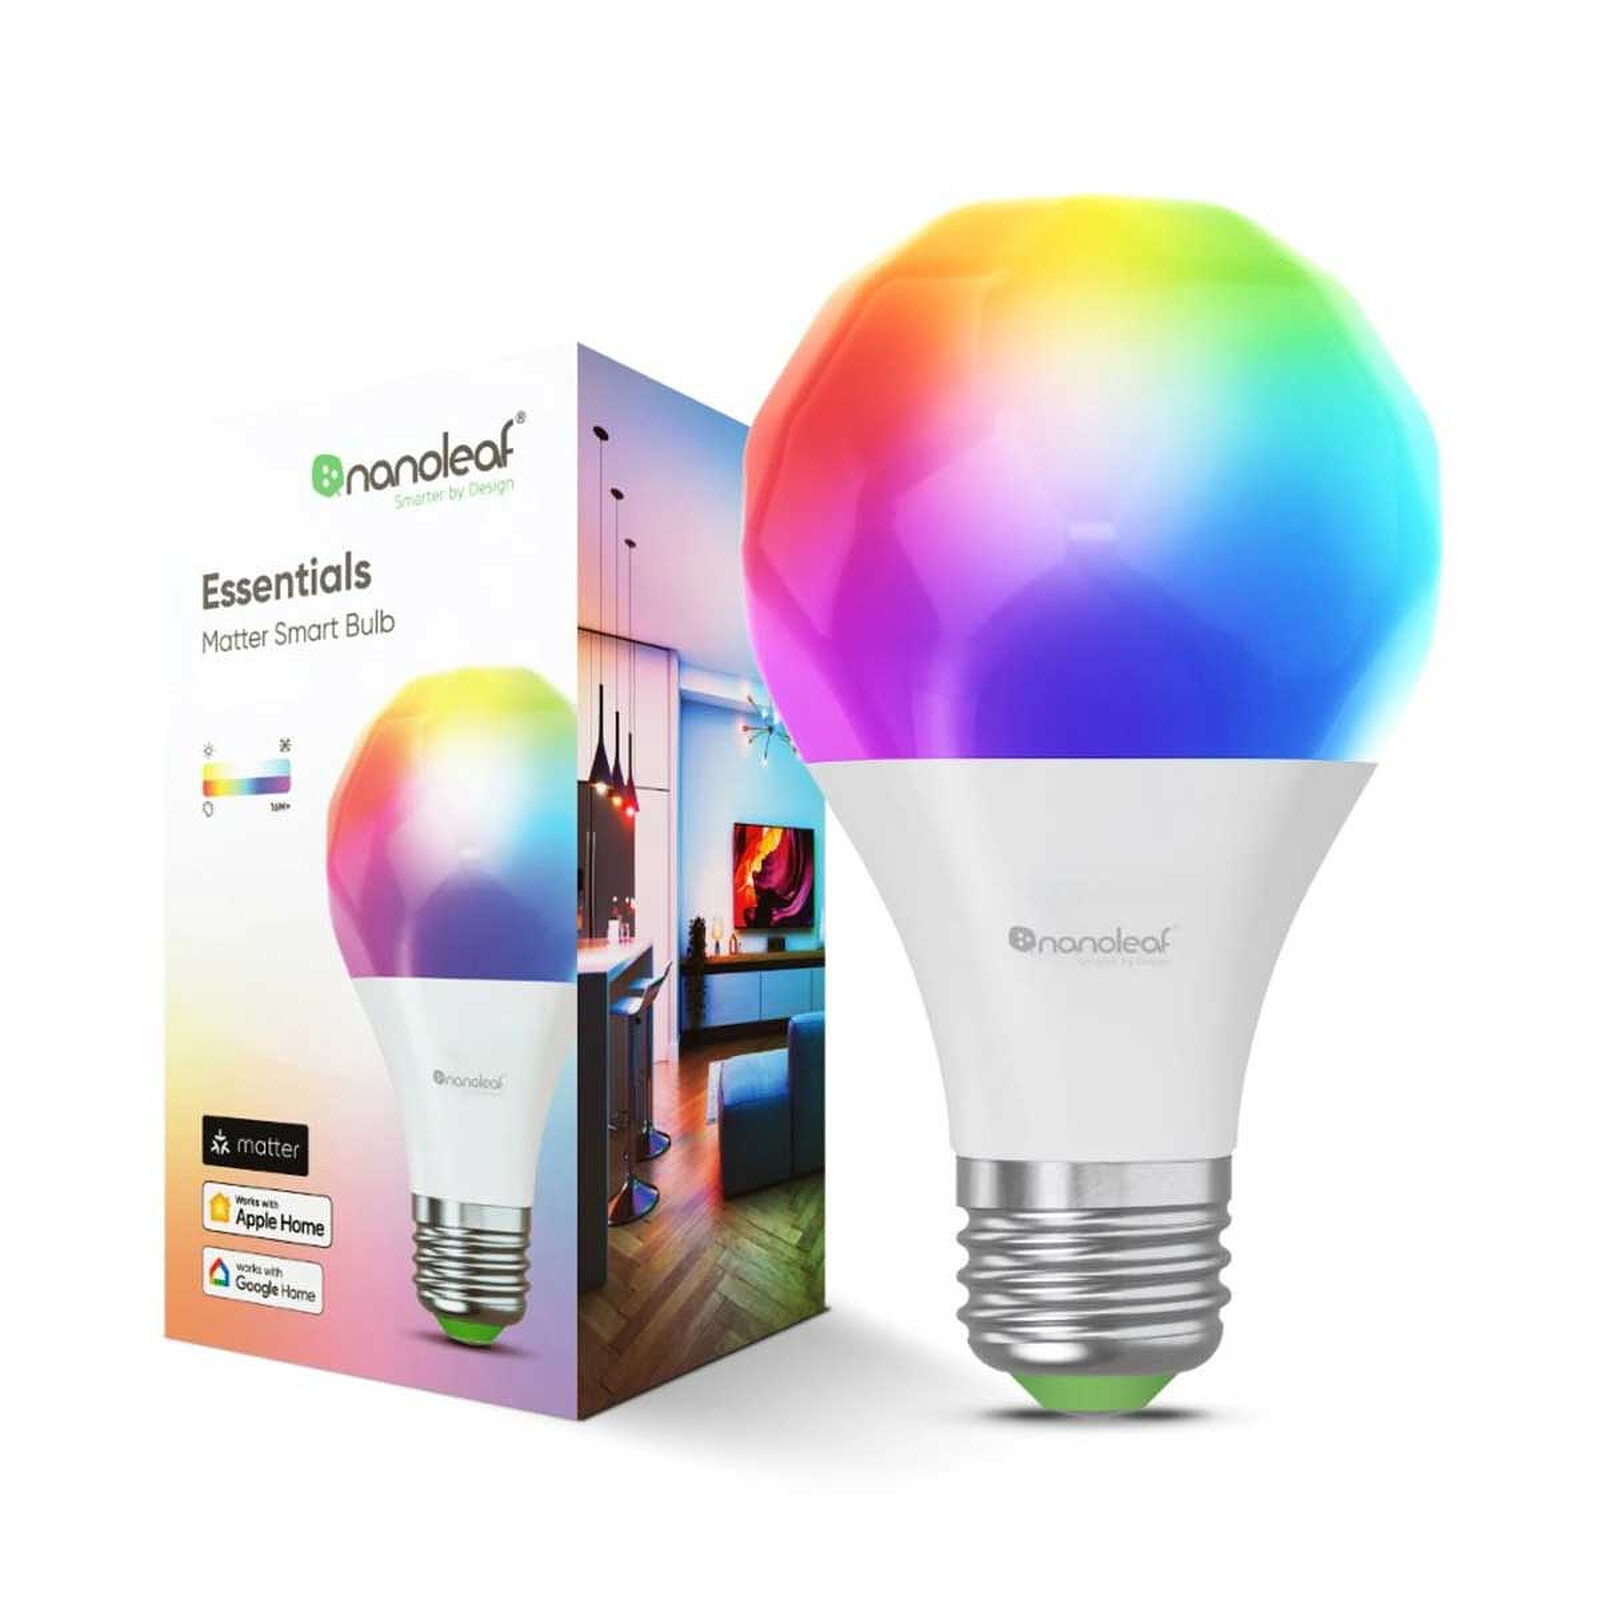 Nanoleaf Essentials Matter Smart Bulb A60 E27 - Smart light bulb - LDLC  3-year warranty